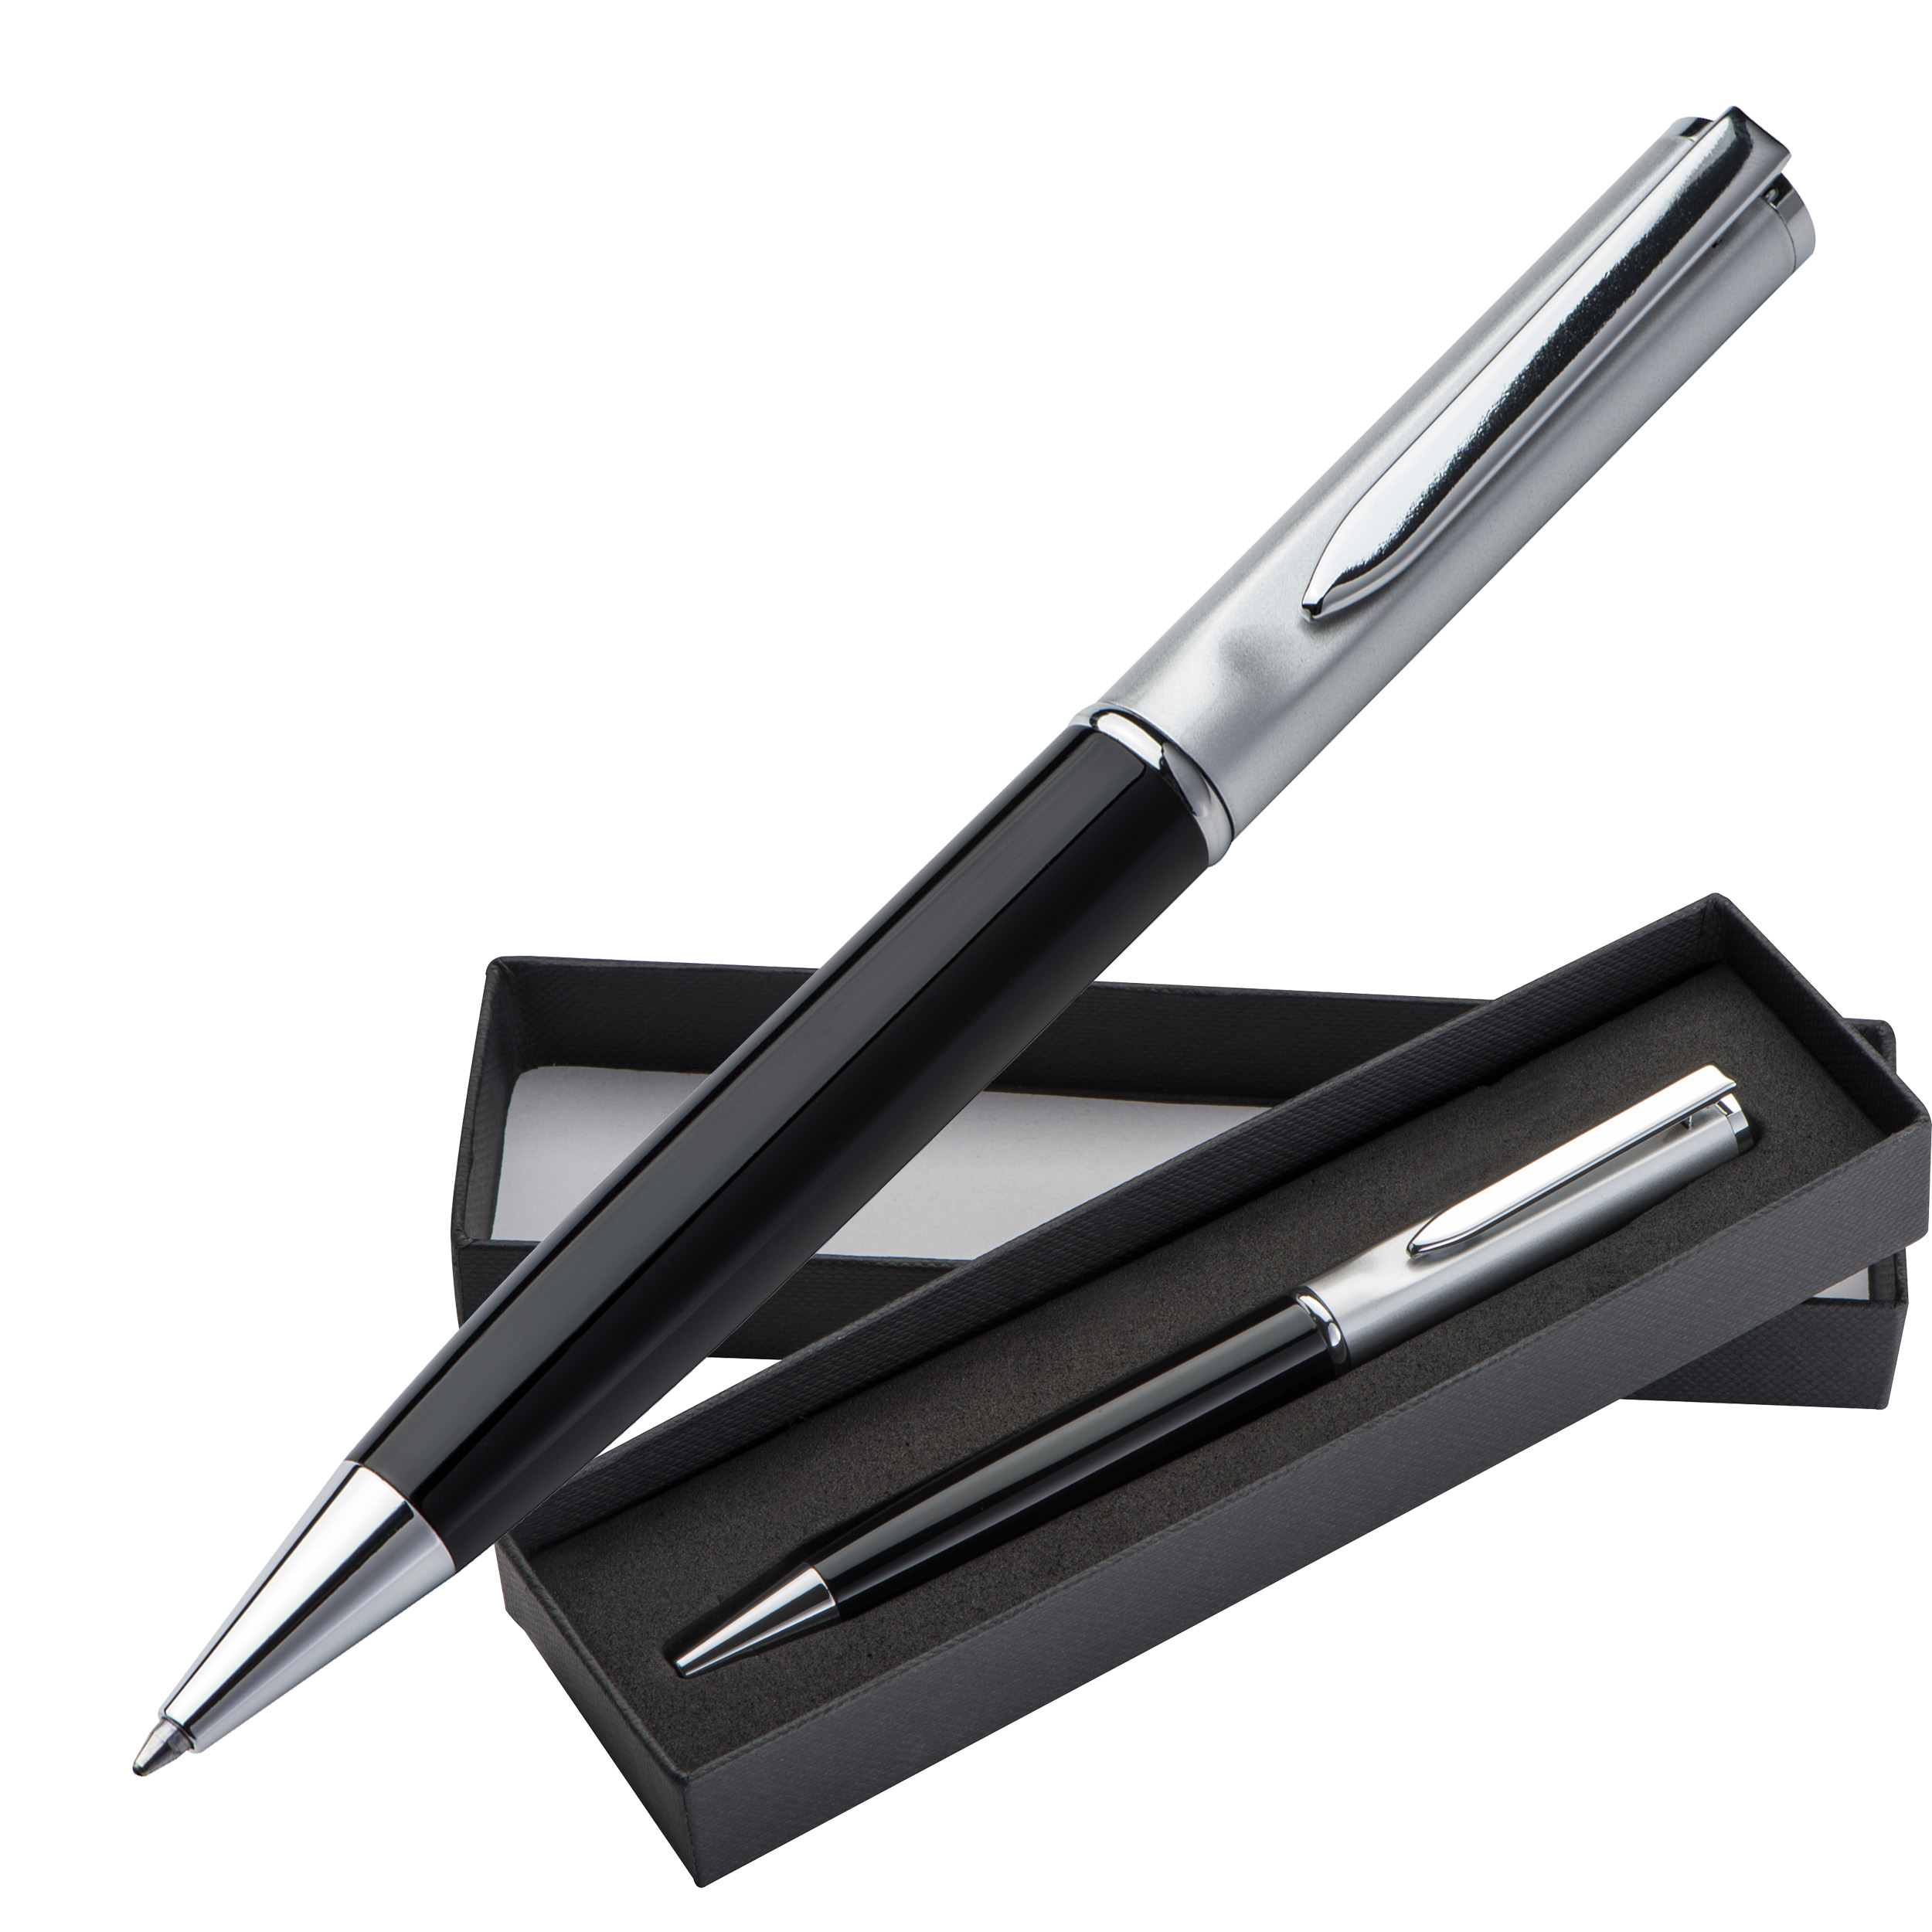 An elegant ballpoint pen with a silver cap - Tockholes - Chesterfield